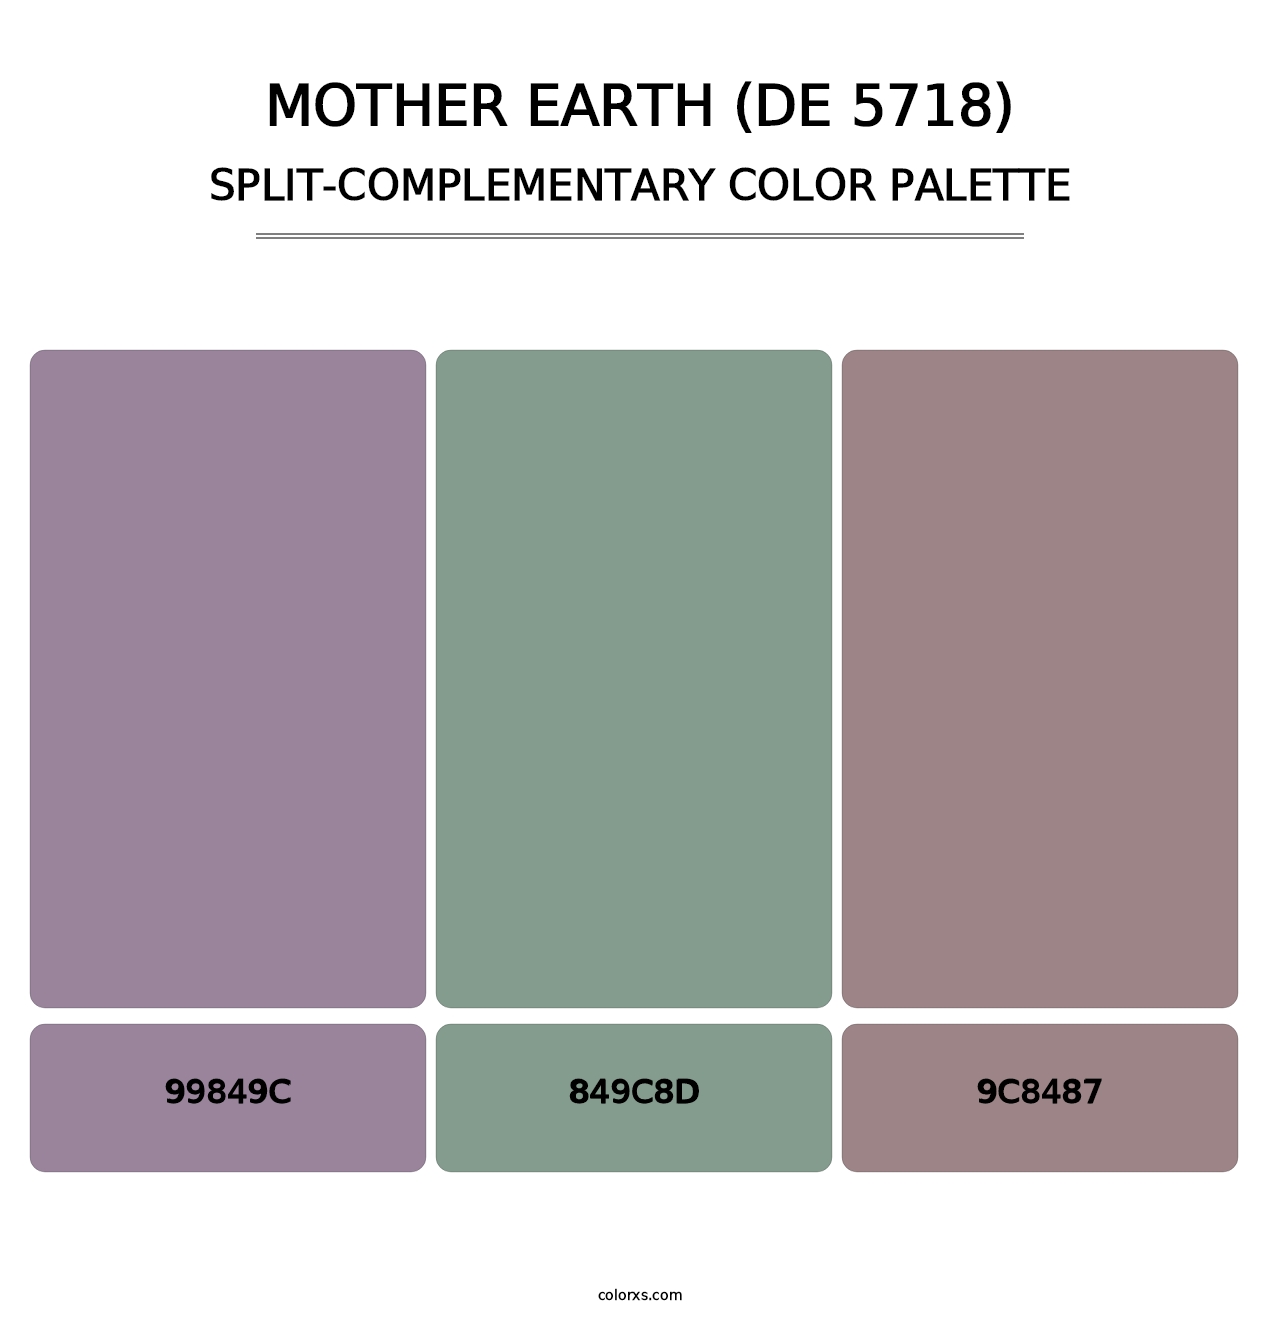 Mother Earth (DE 5718) - Split-Complementary Color Palette